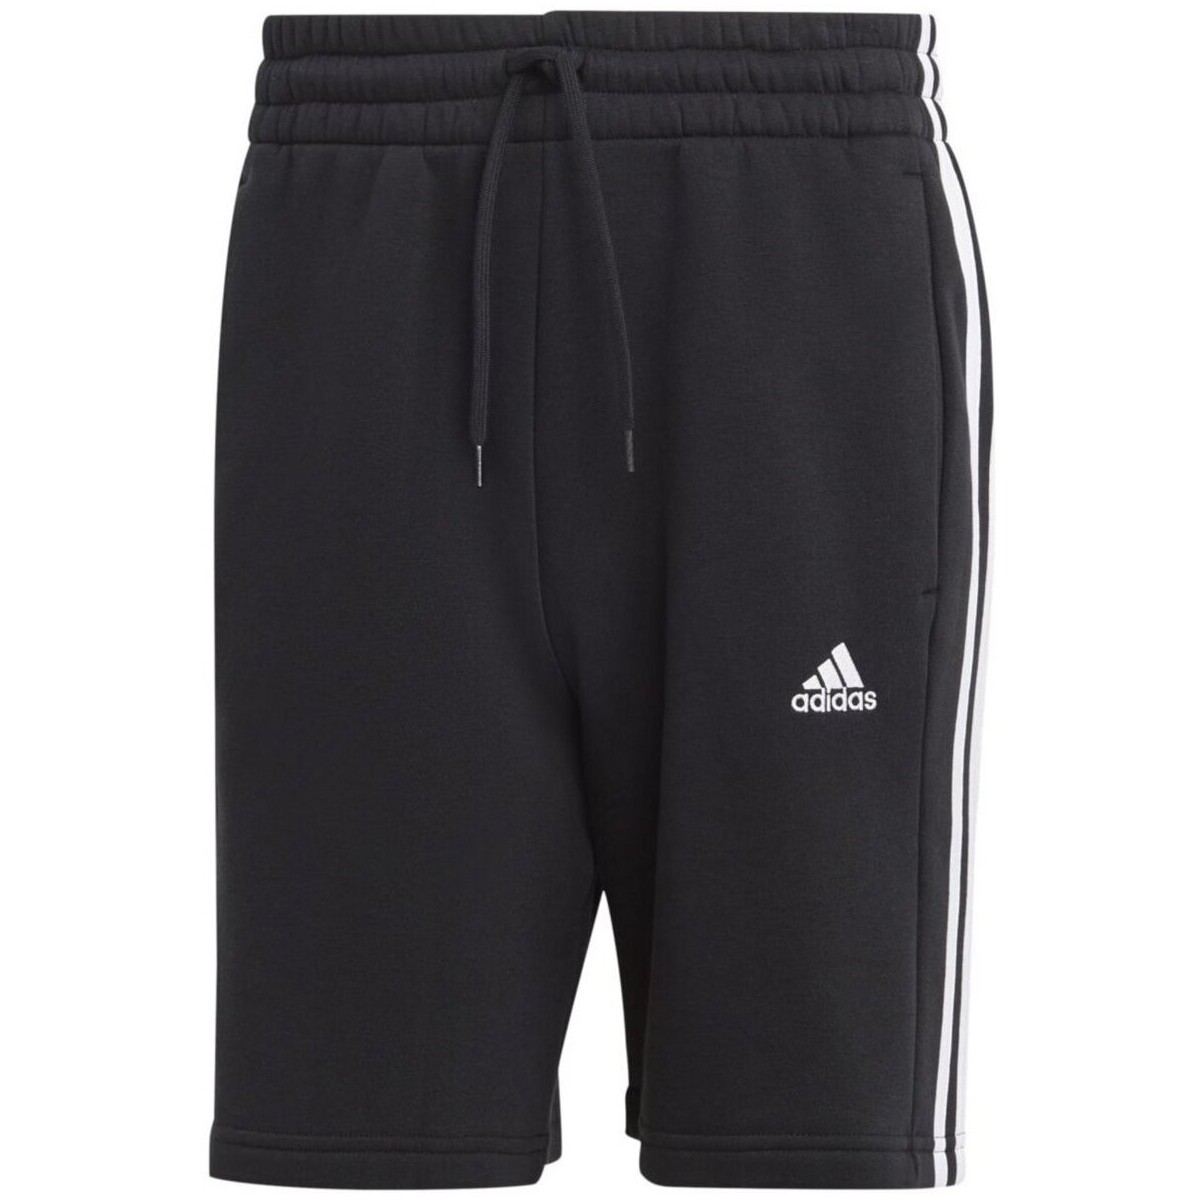 Vêtements Homme Shorts / Bermudas adidas Originals  Noir